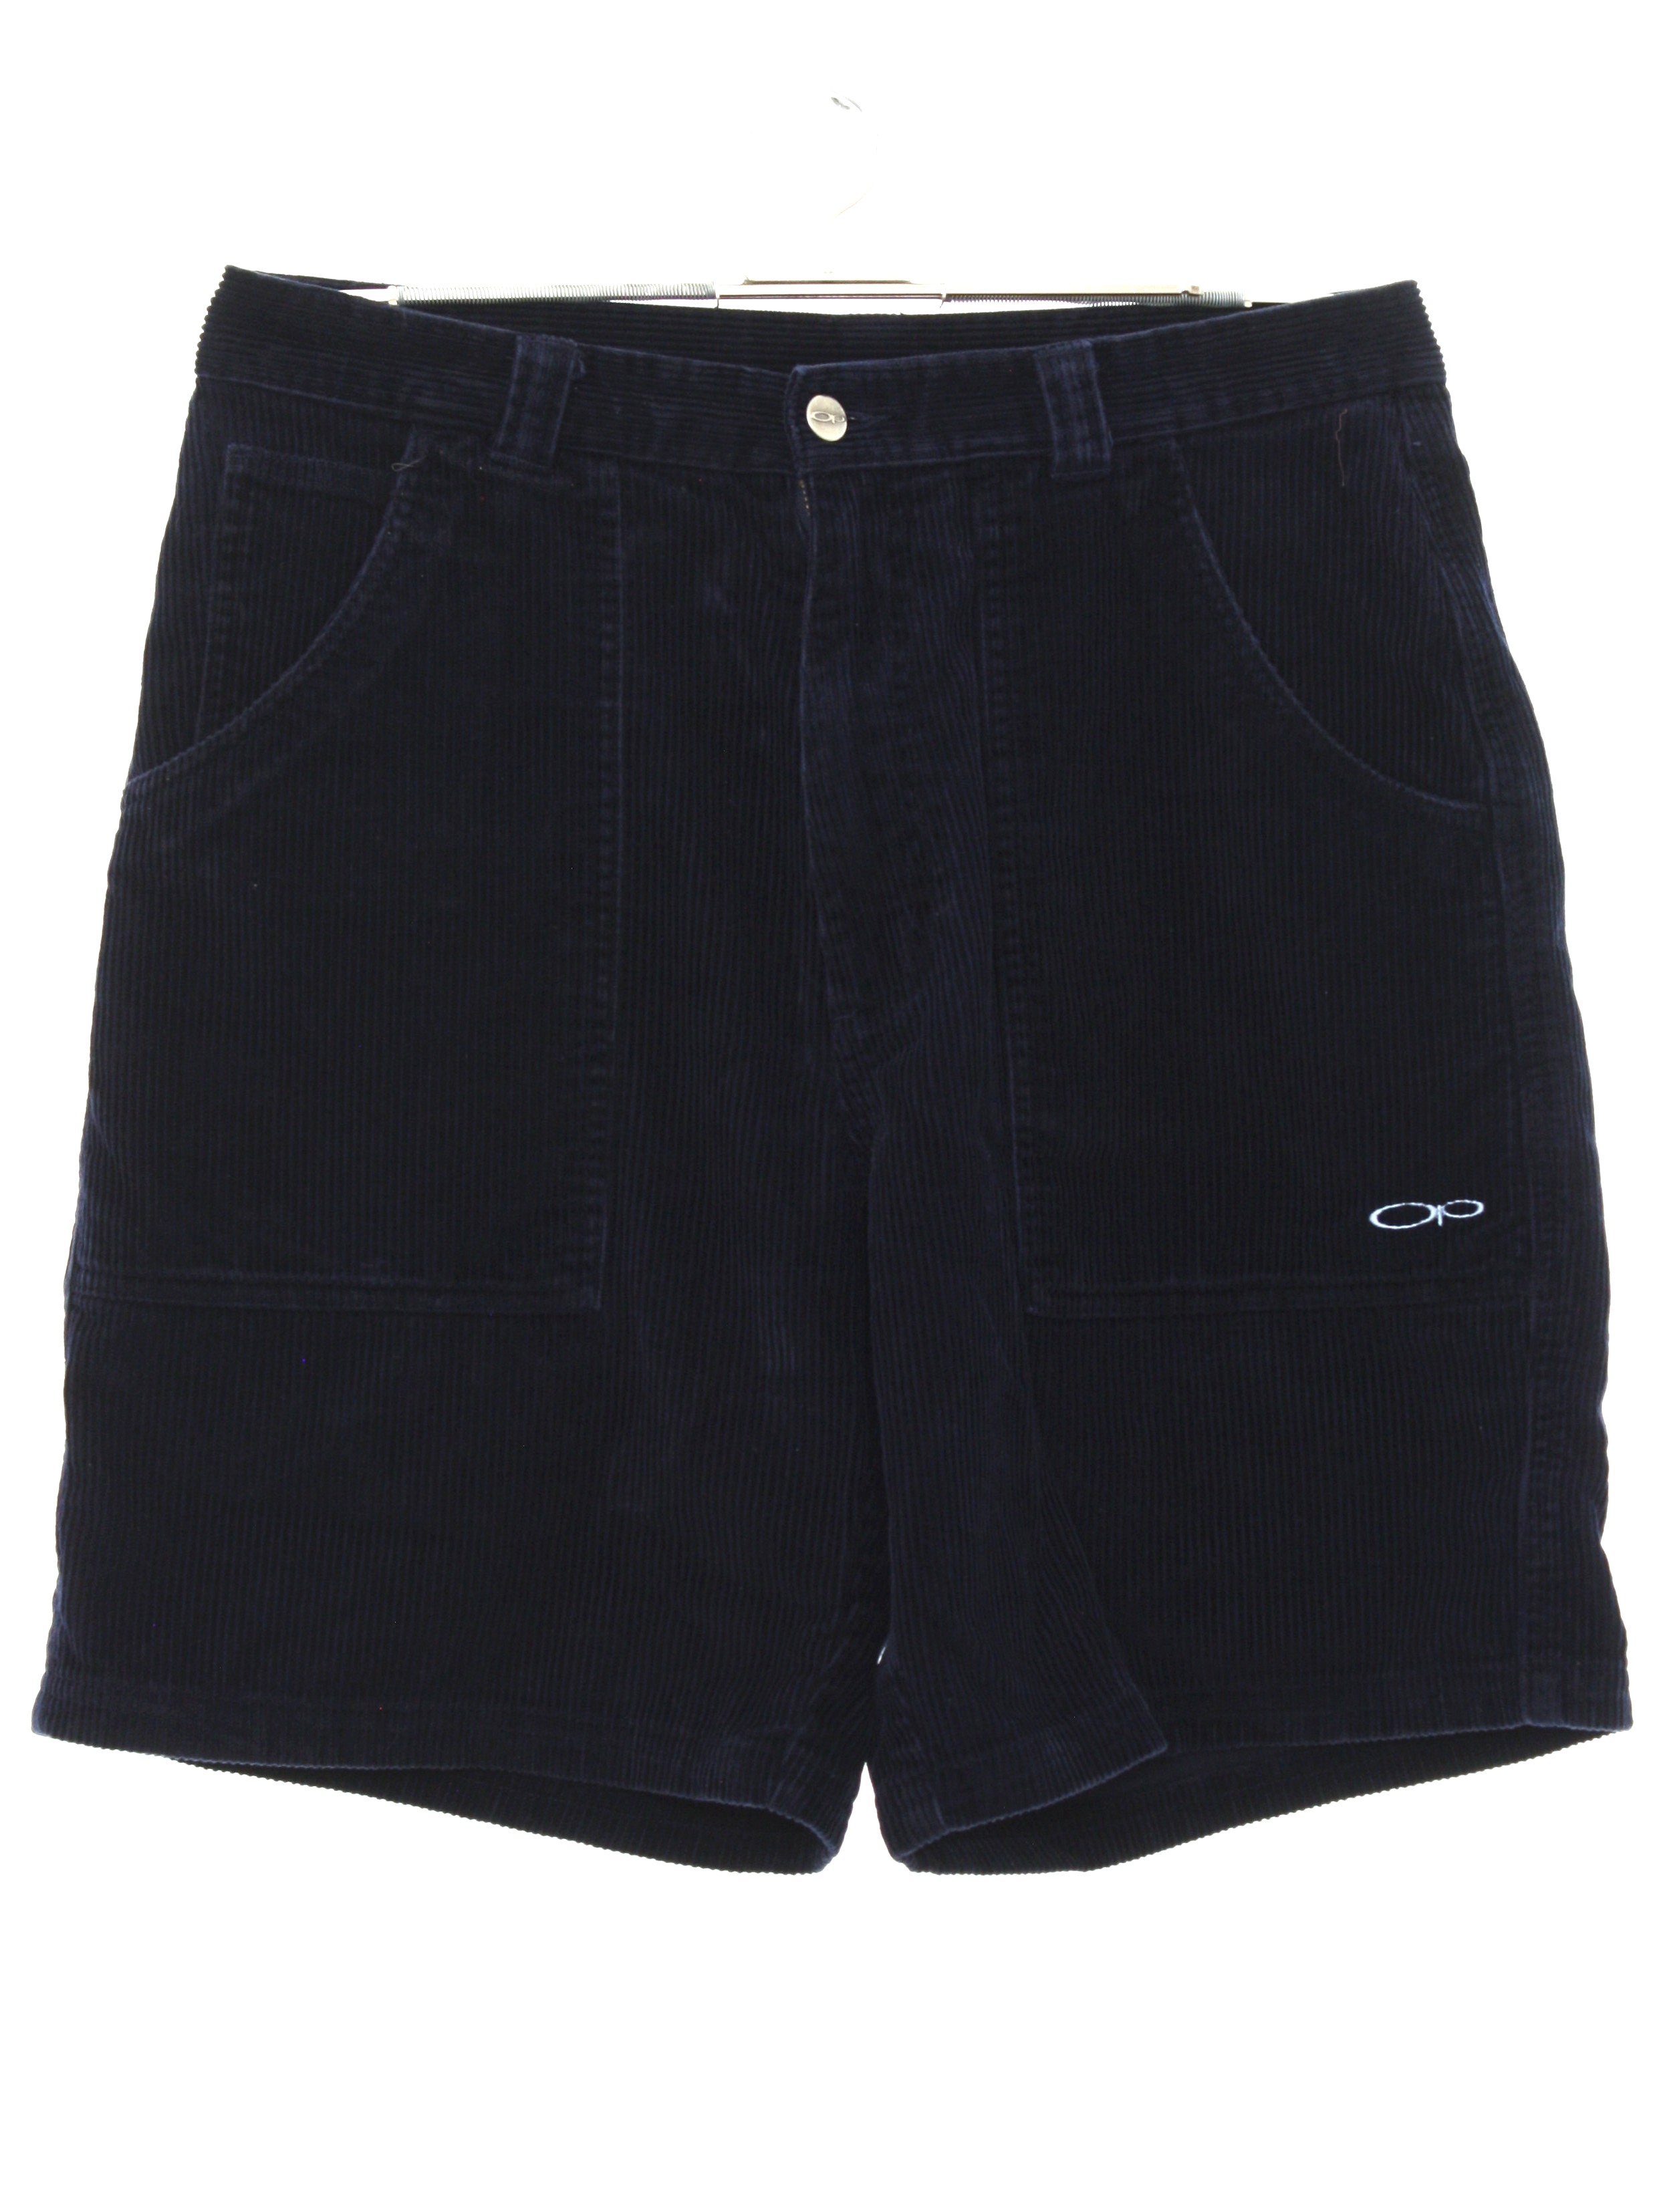 Retro 1990's Shorts (Ocean Pacific) : 90s -Ocean Pacific- Mens